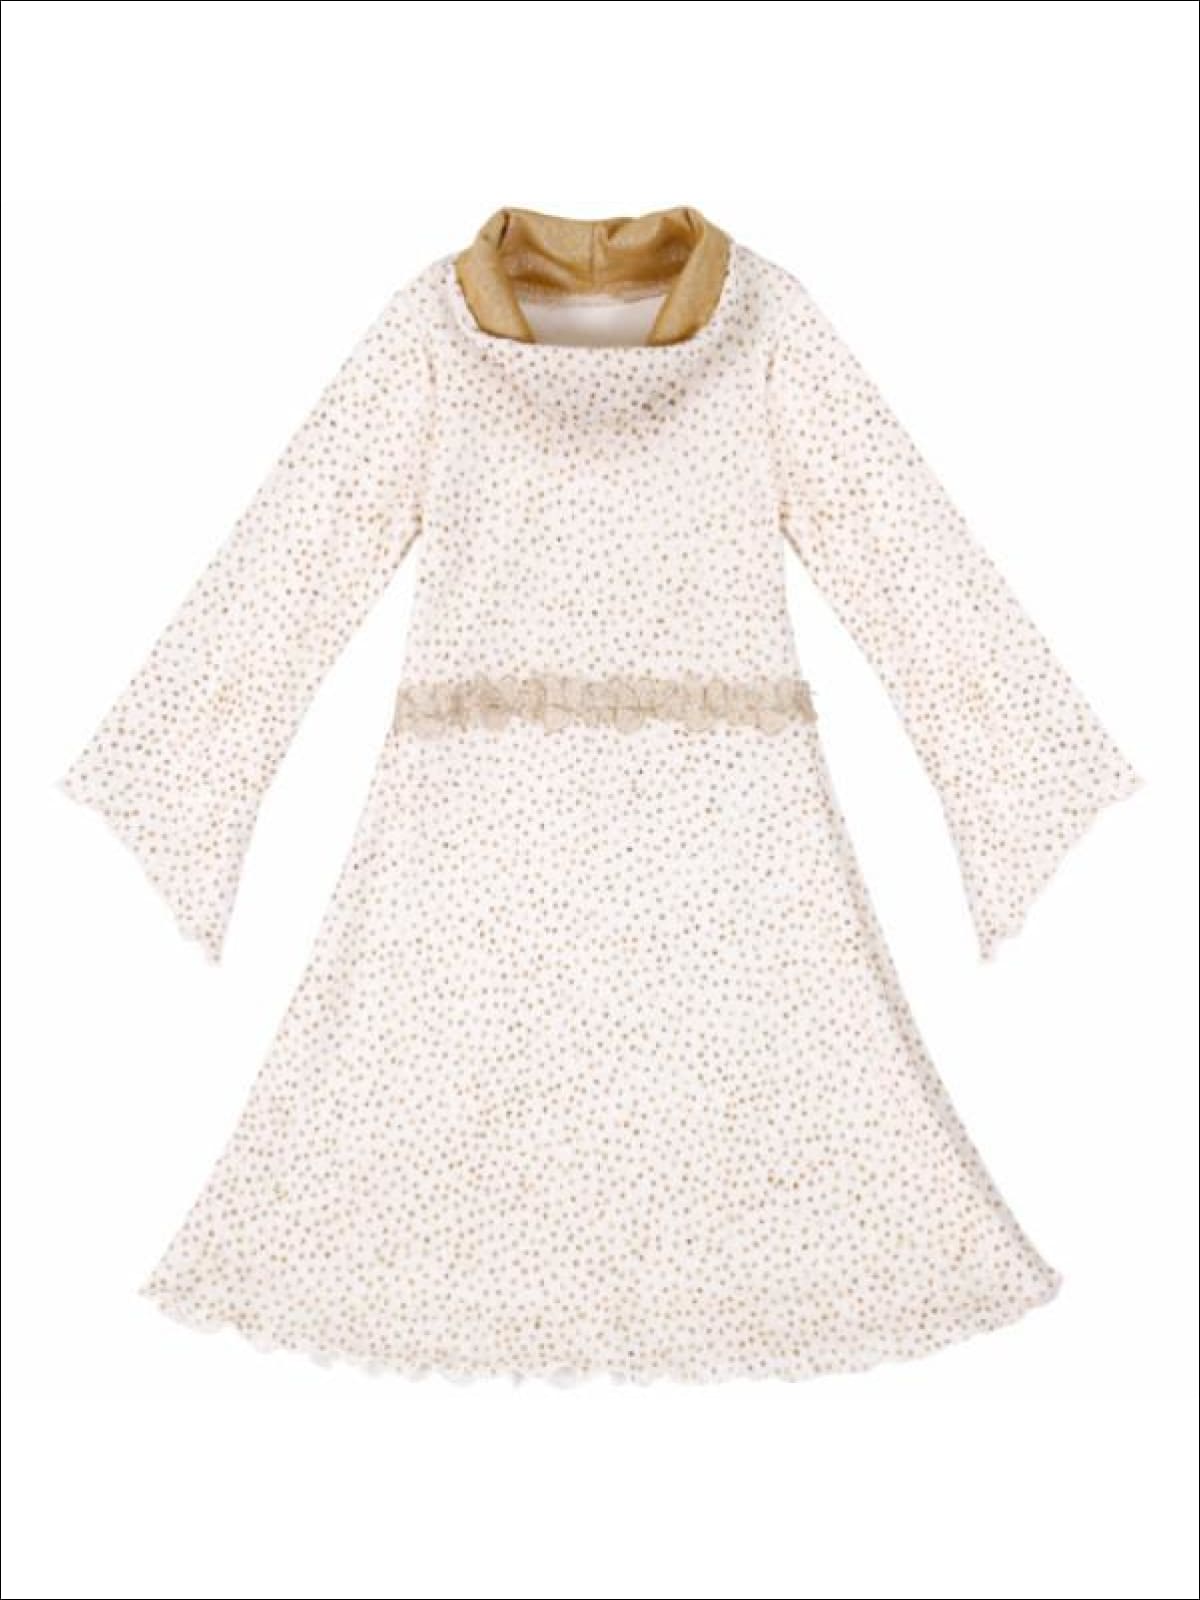 Girls Gold/Creme Turtleneck Sweater Dress w/ Wide Sleeves - Girls Fall Dress